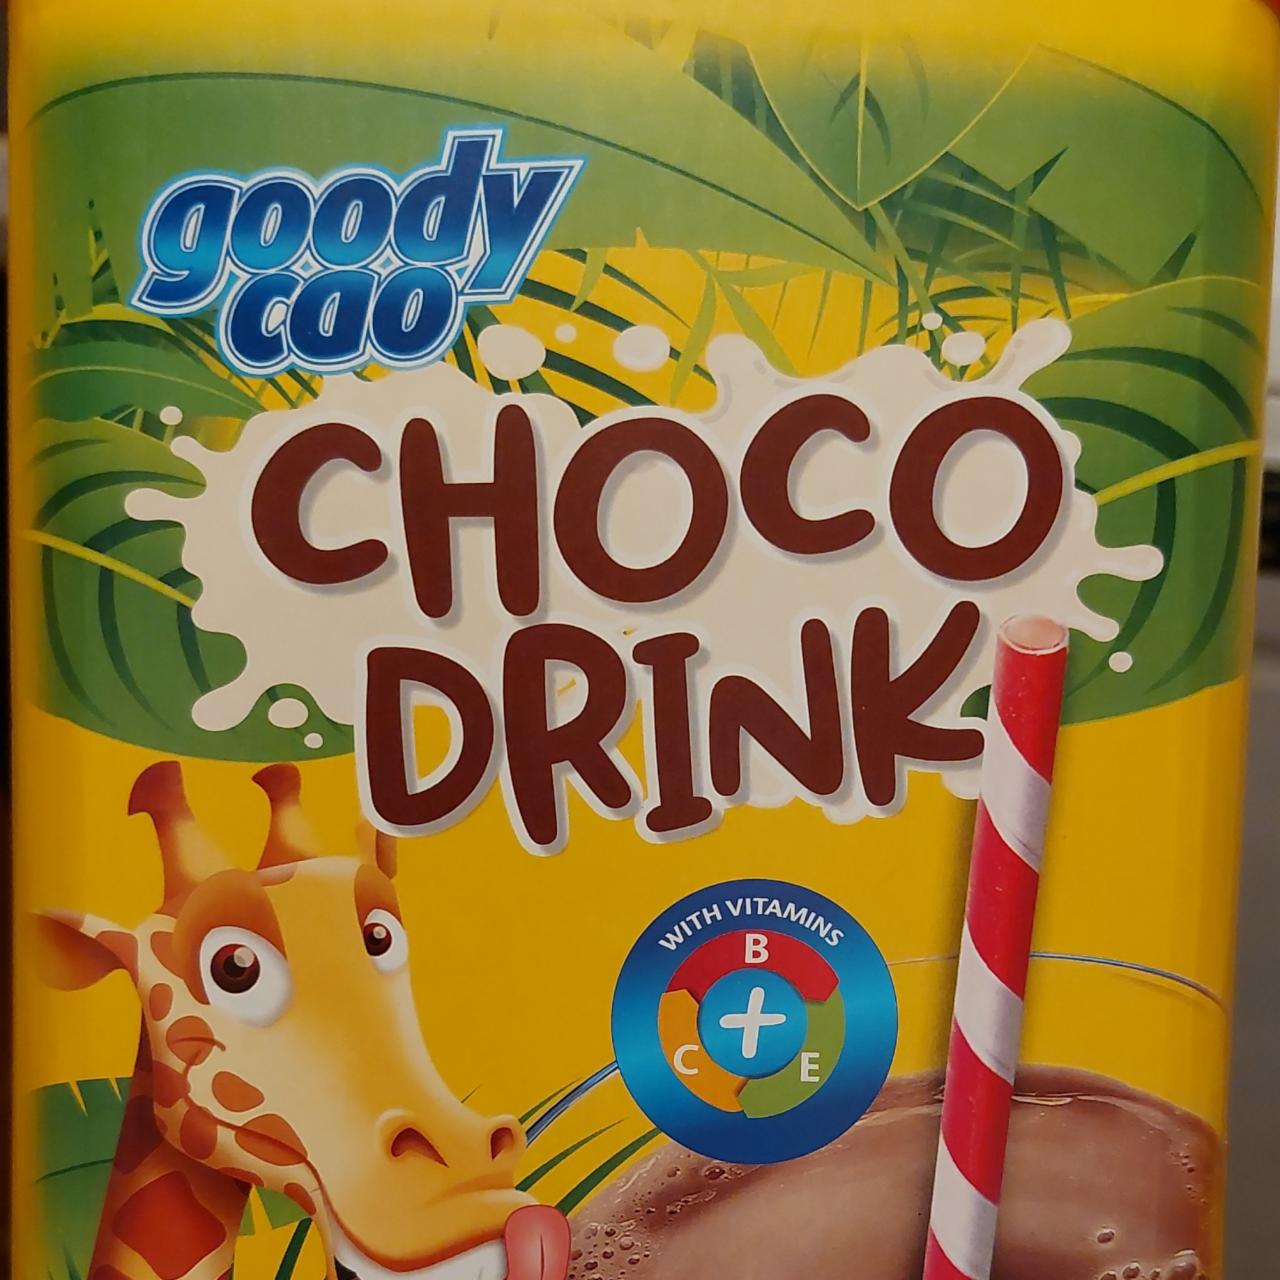 Fotografie - Choco Drink Goody Cao